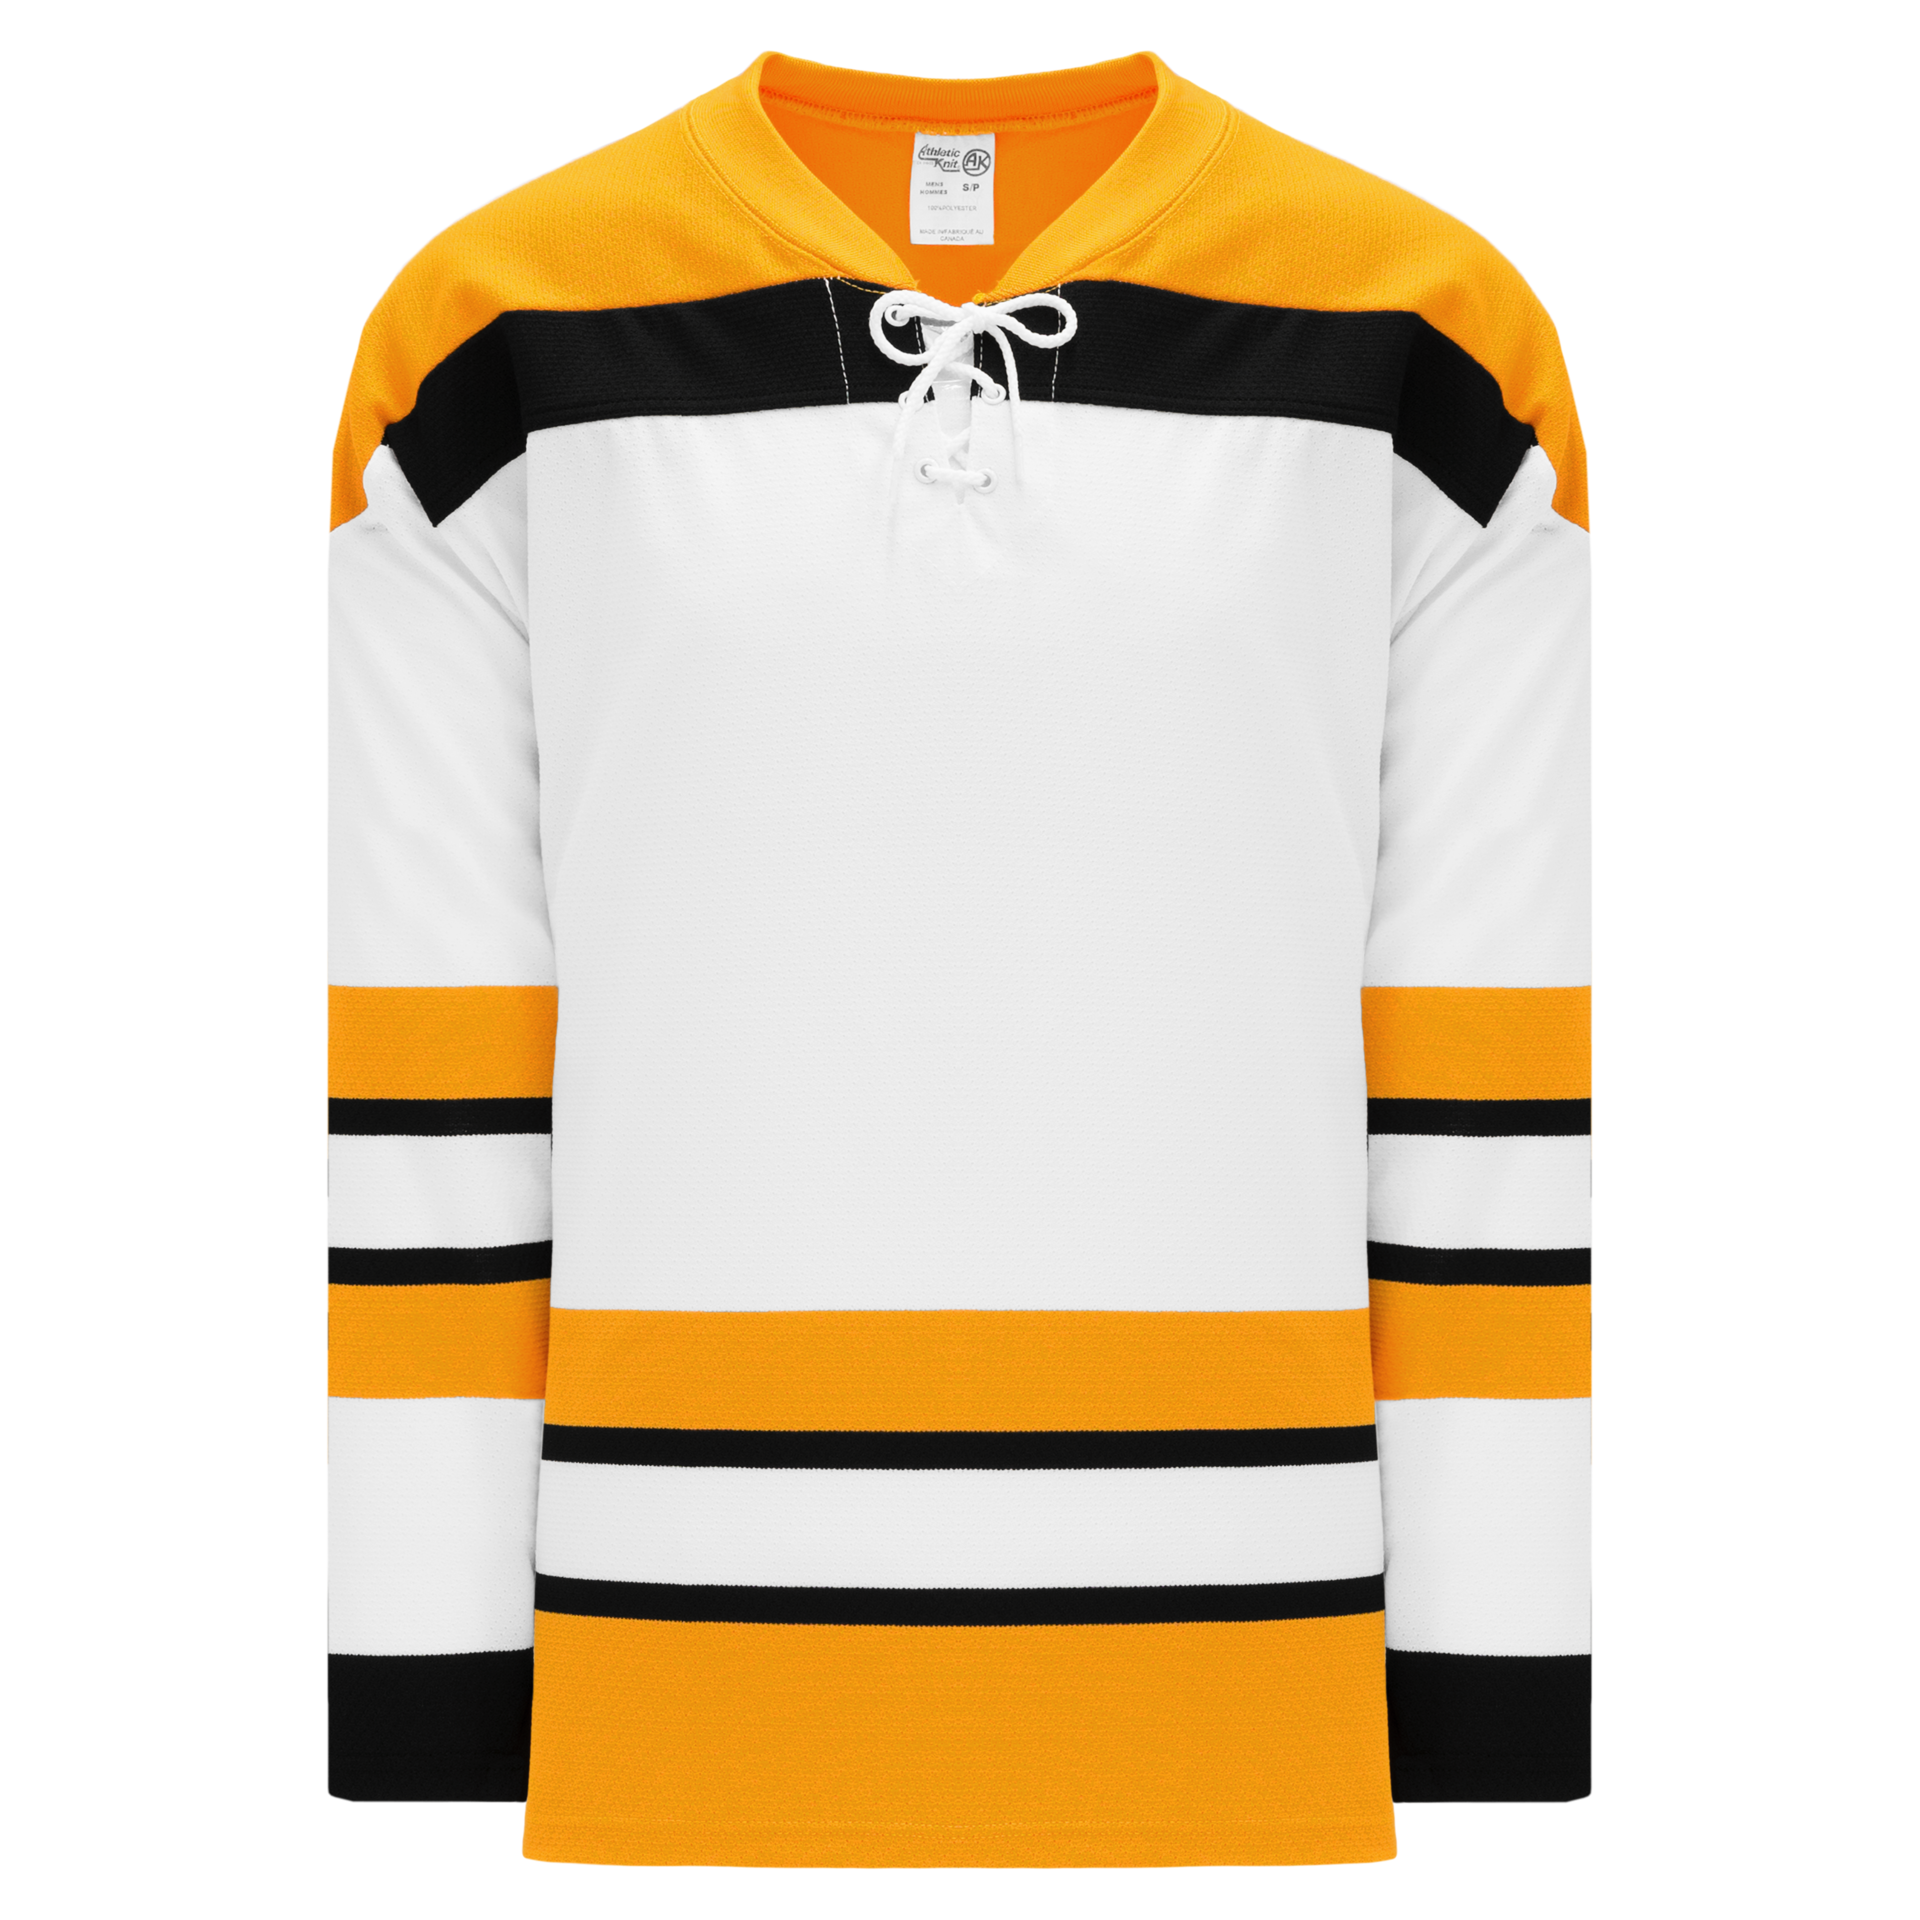 Boston Bruins Vintage Jerseys